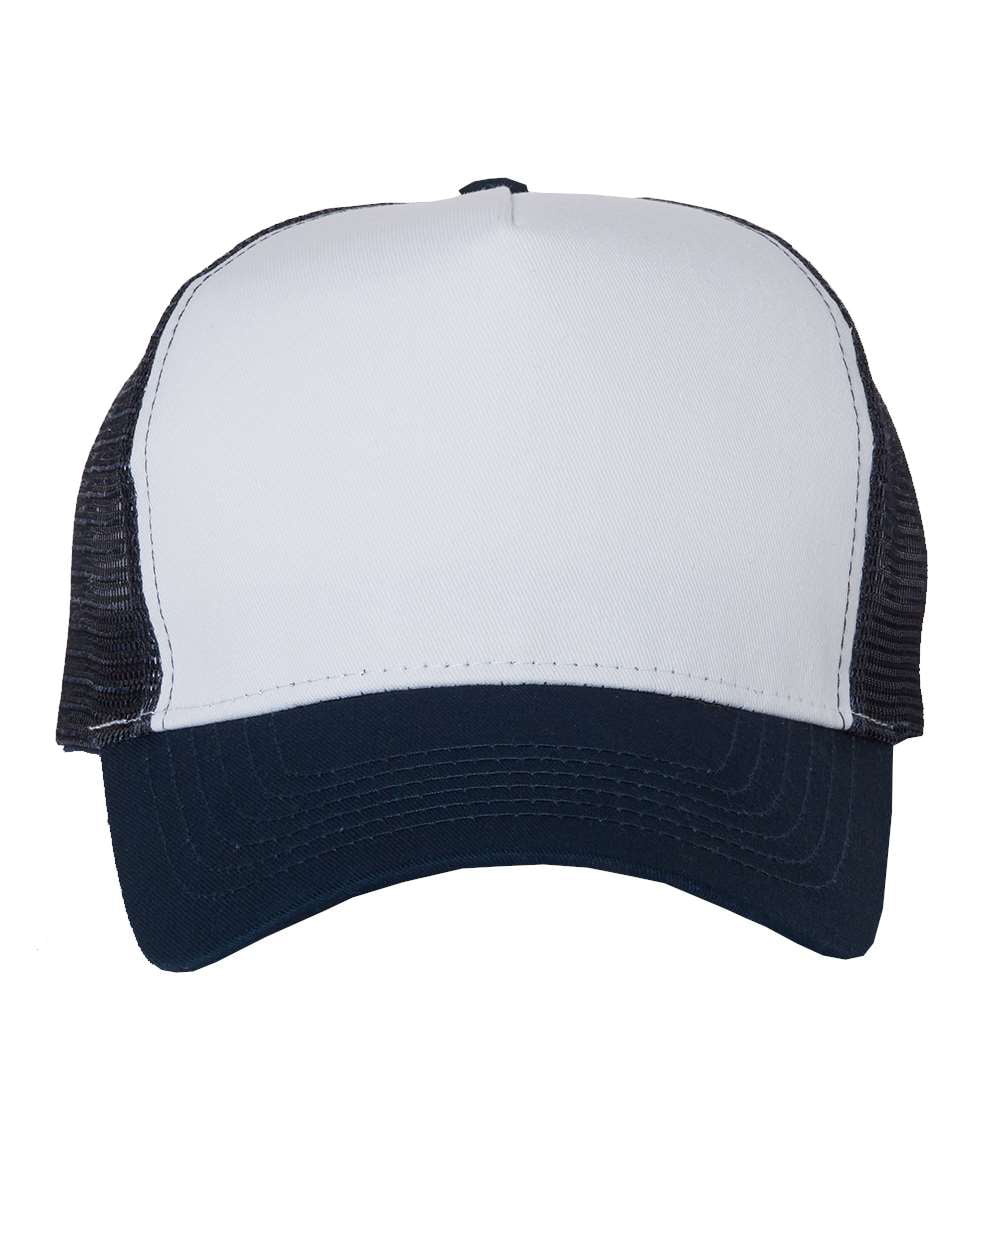 Boys and Girls 100% Polyester Sugar Skulls Mesh Cap Stretch Mesh Back Trucker Hat for Unisex